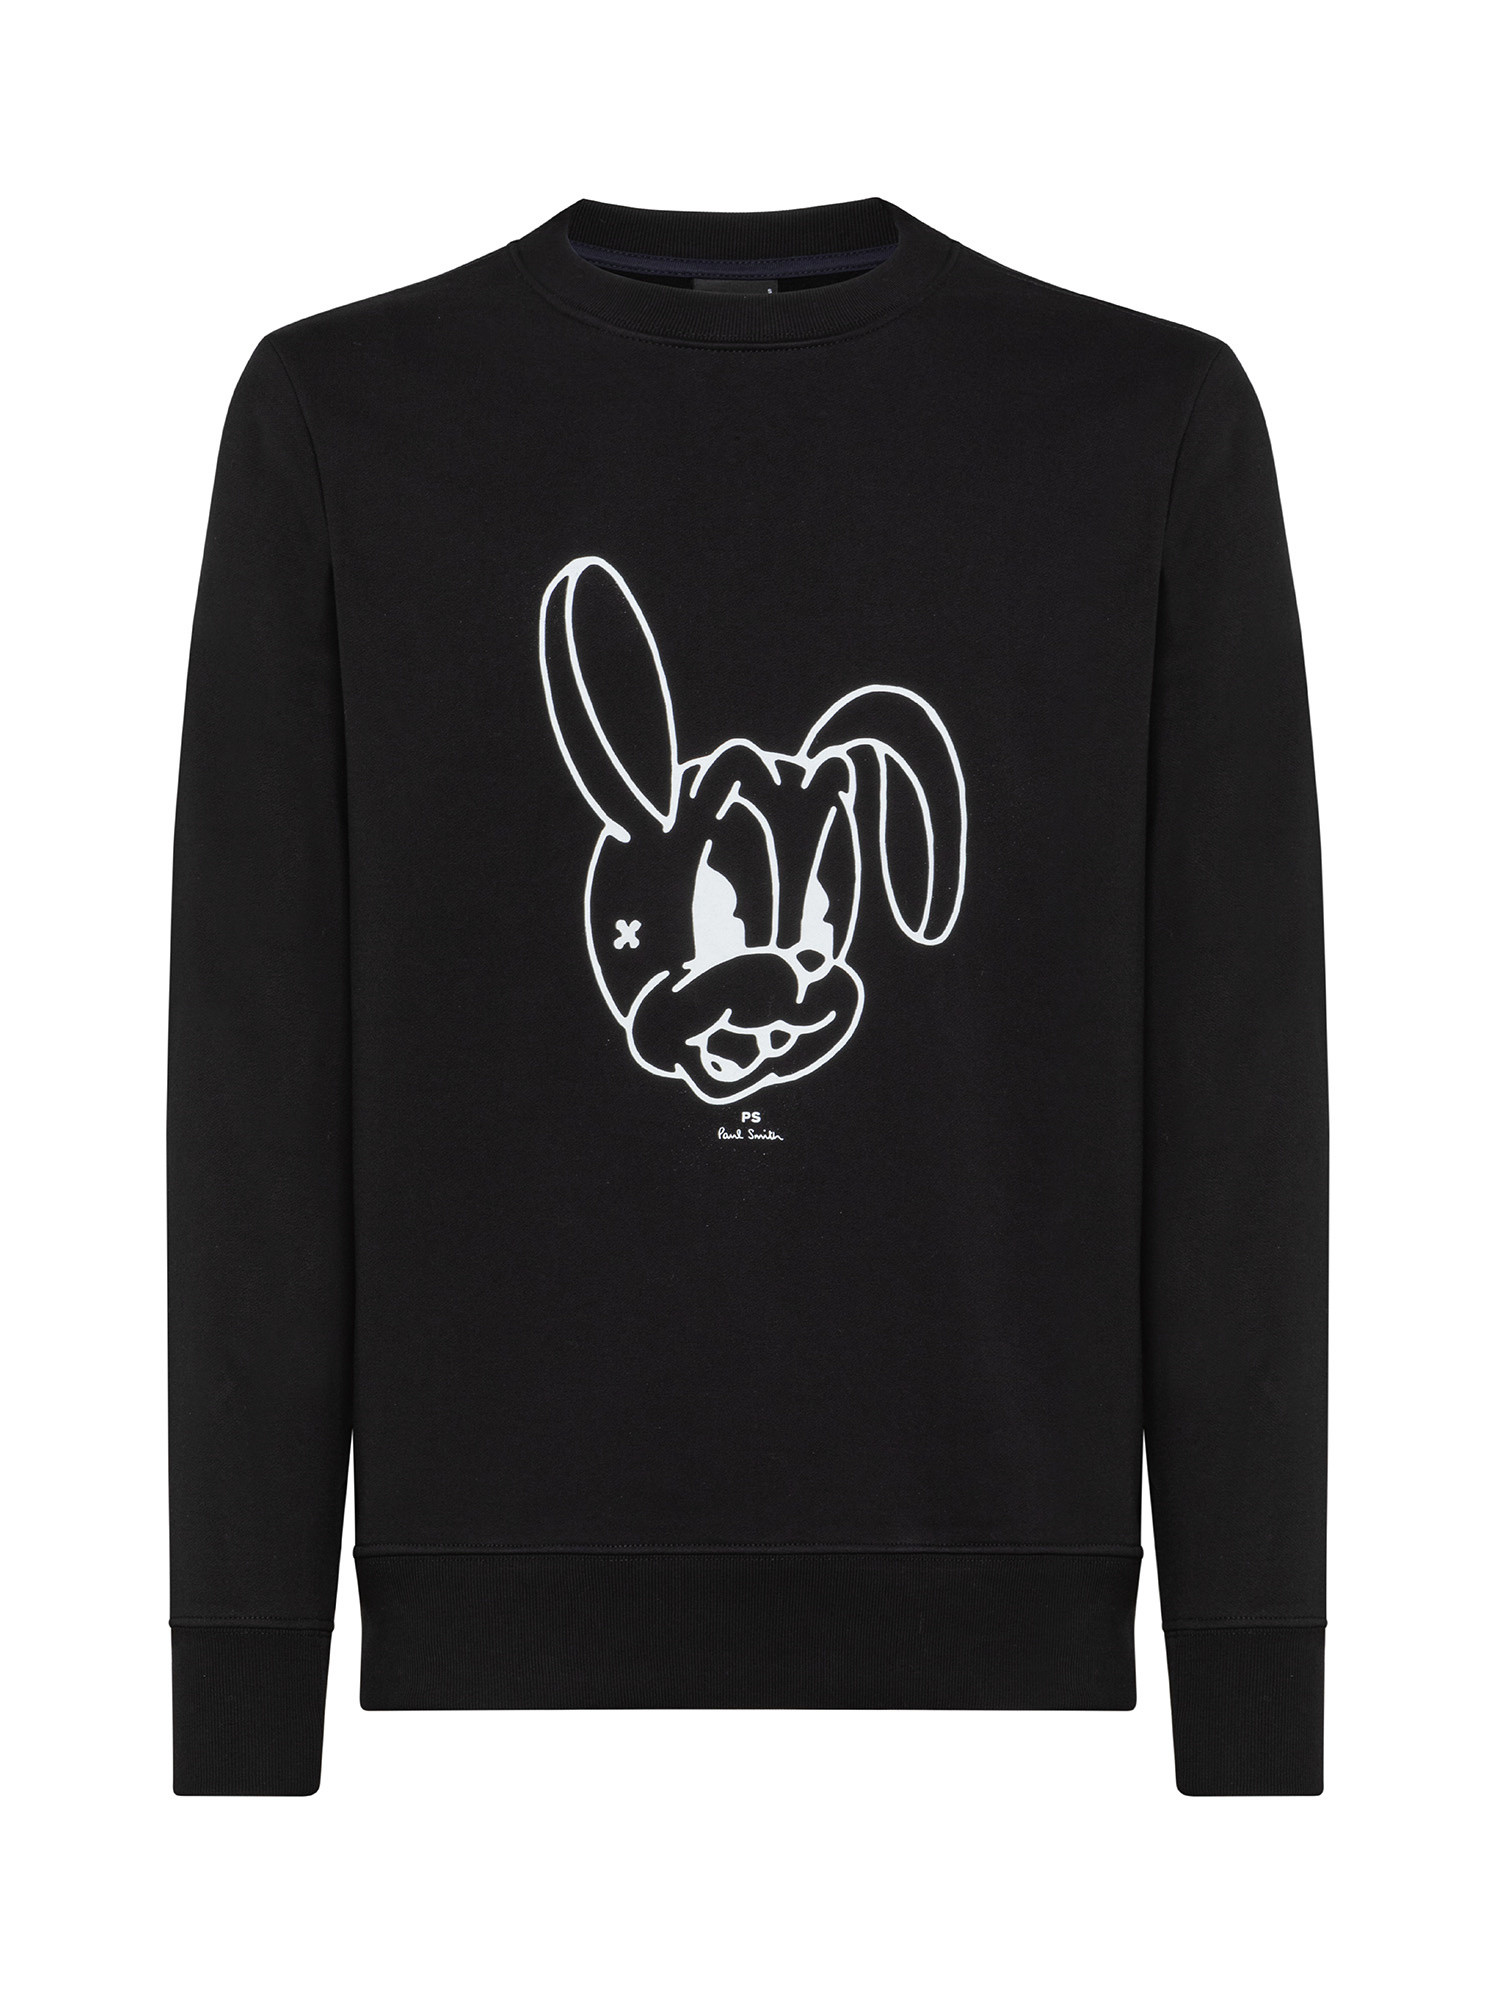 Sweatshirt with rabbit print, Black, large image number 0